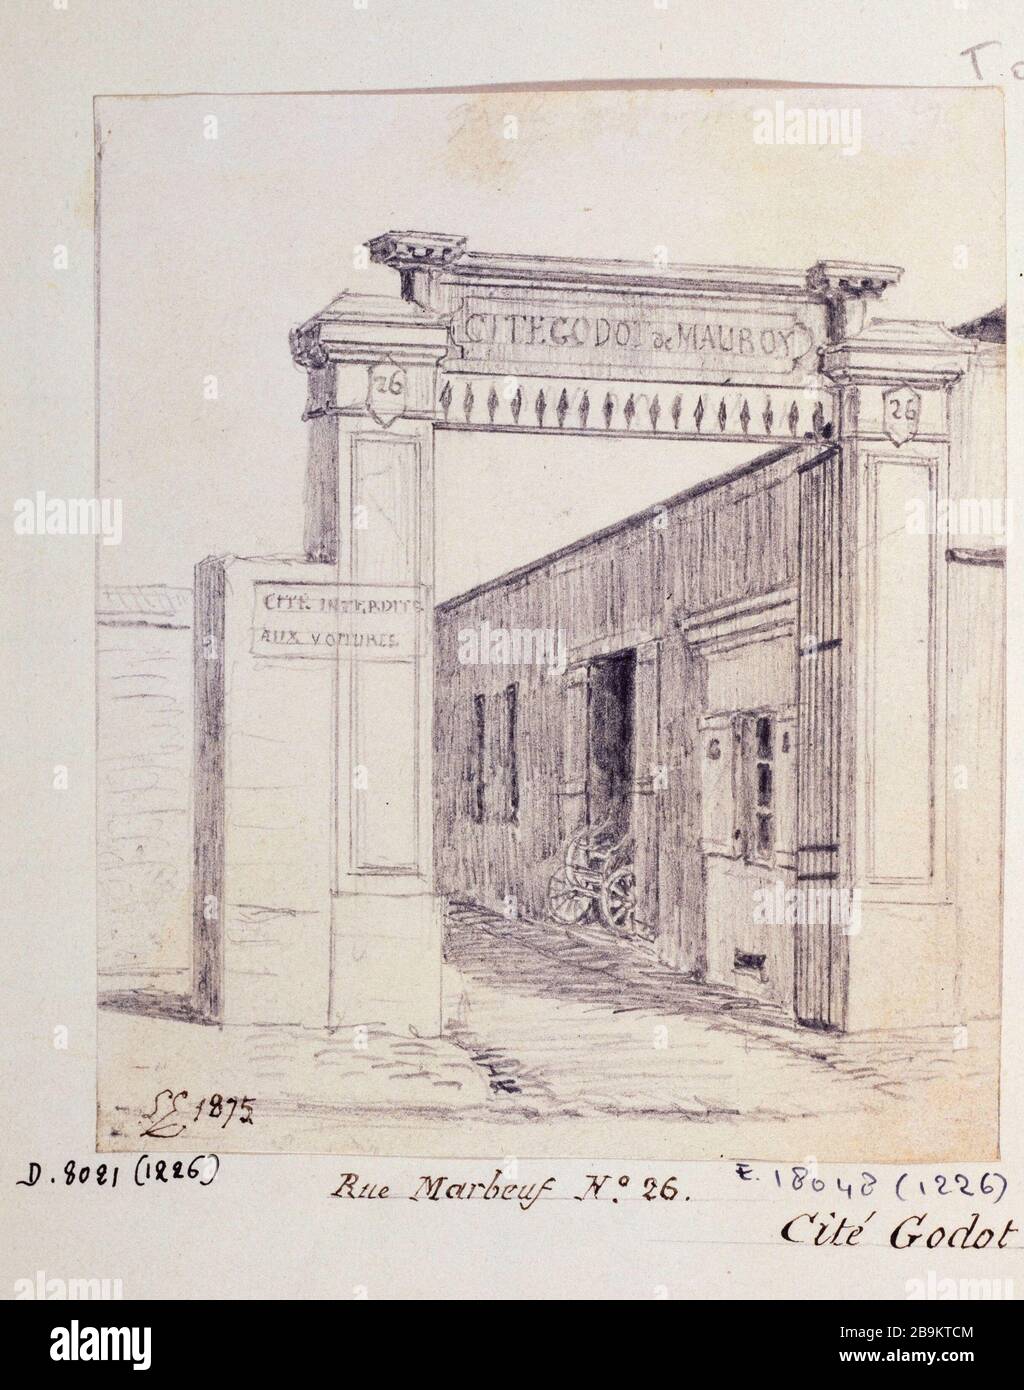 City Godot de Mauroy, 26 rue Marbeuf 1875 Léon Leymonnerye (1803-1879). Cité Godot de Mauroy, 26 rue Marbeuf, 1875. Crayon, 1875. Paris, musée Carnavalet. Stock Photo